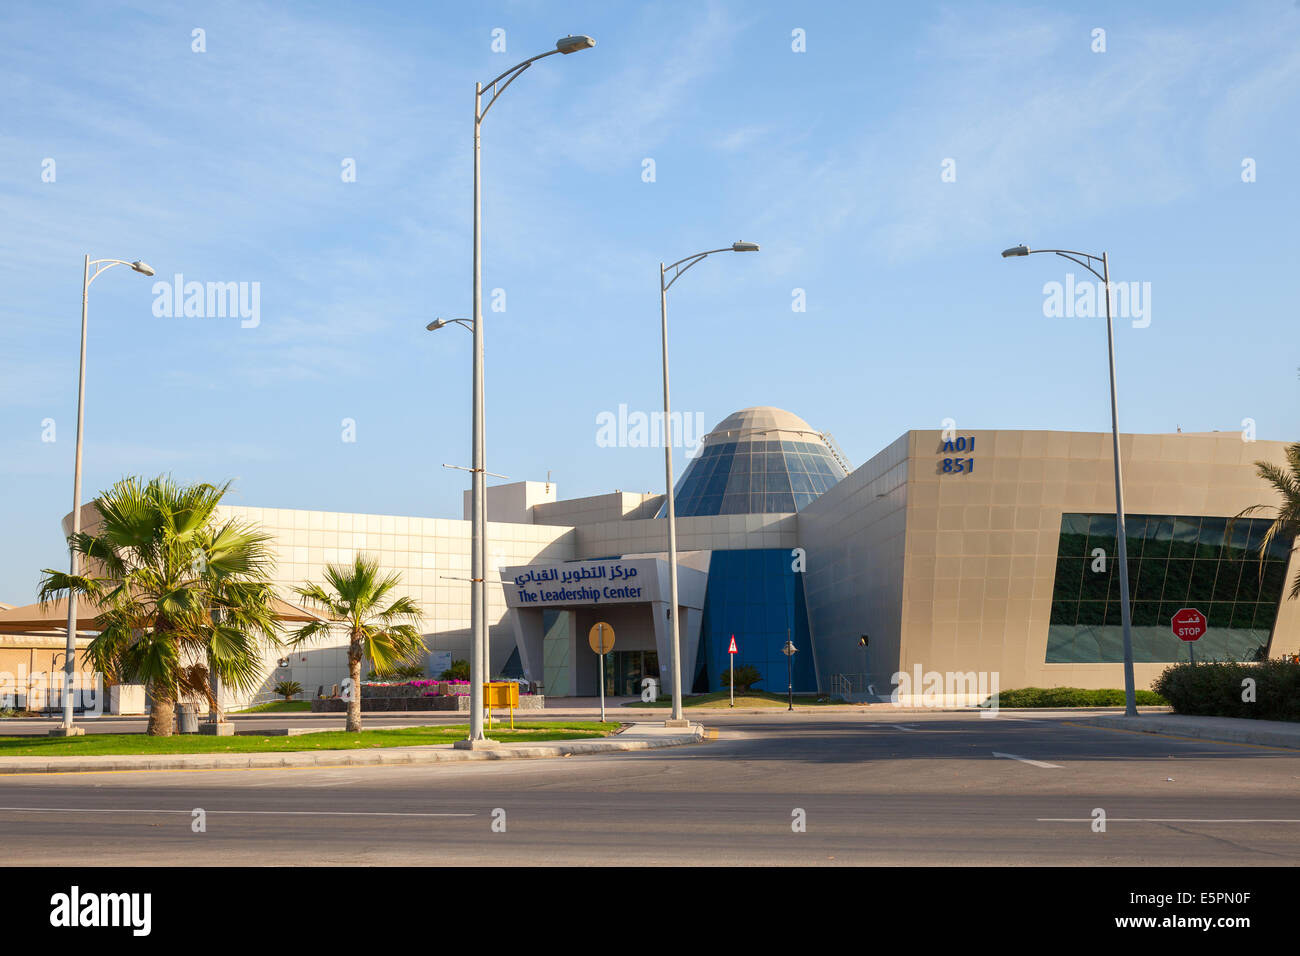 RAHIMA, SAUDI ARABIA - MAY 16, 2014: Aramco campus, street view The Leadership Center, Saudi Arabia Stock Photo